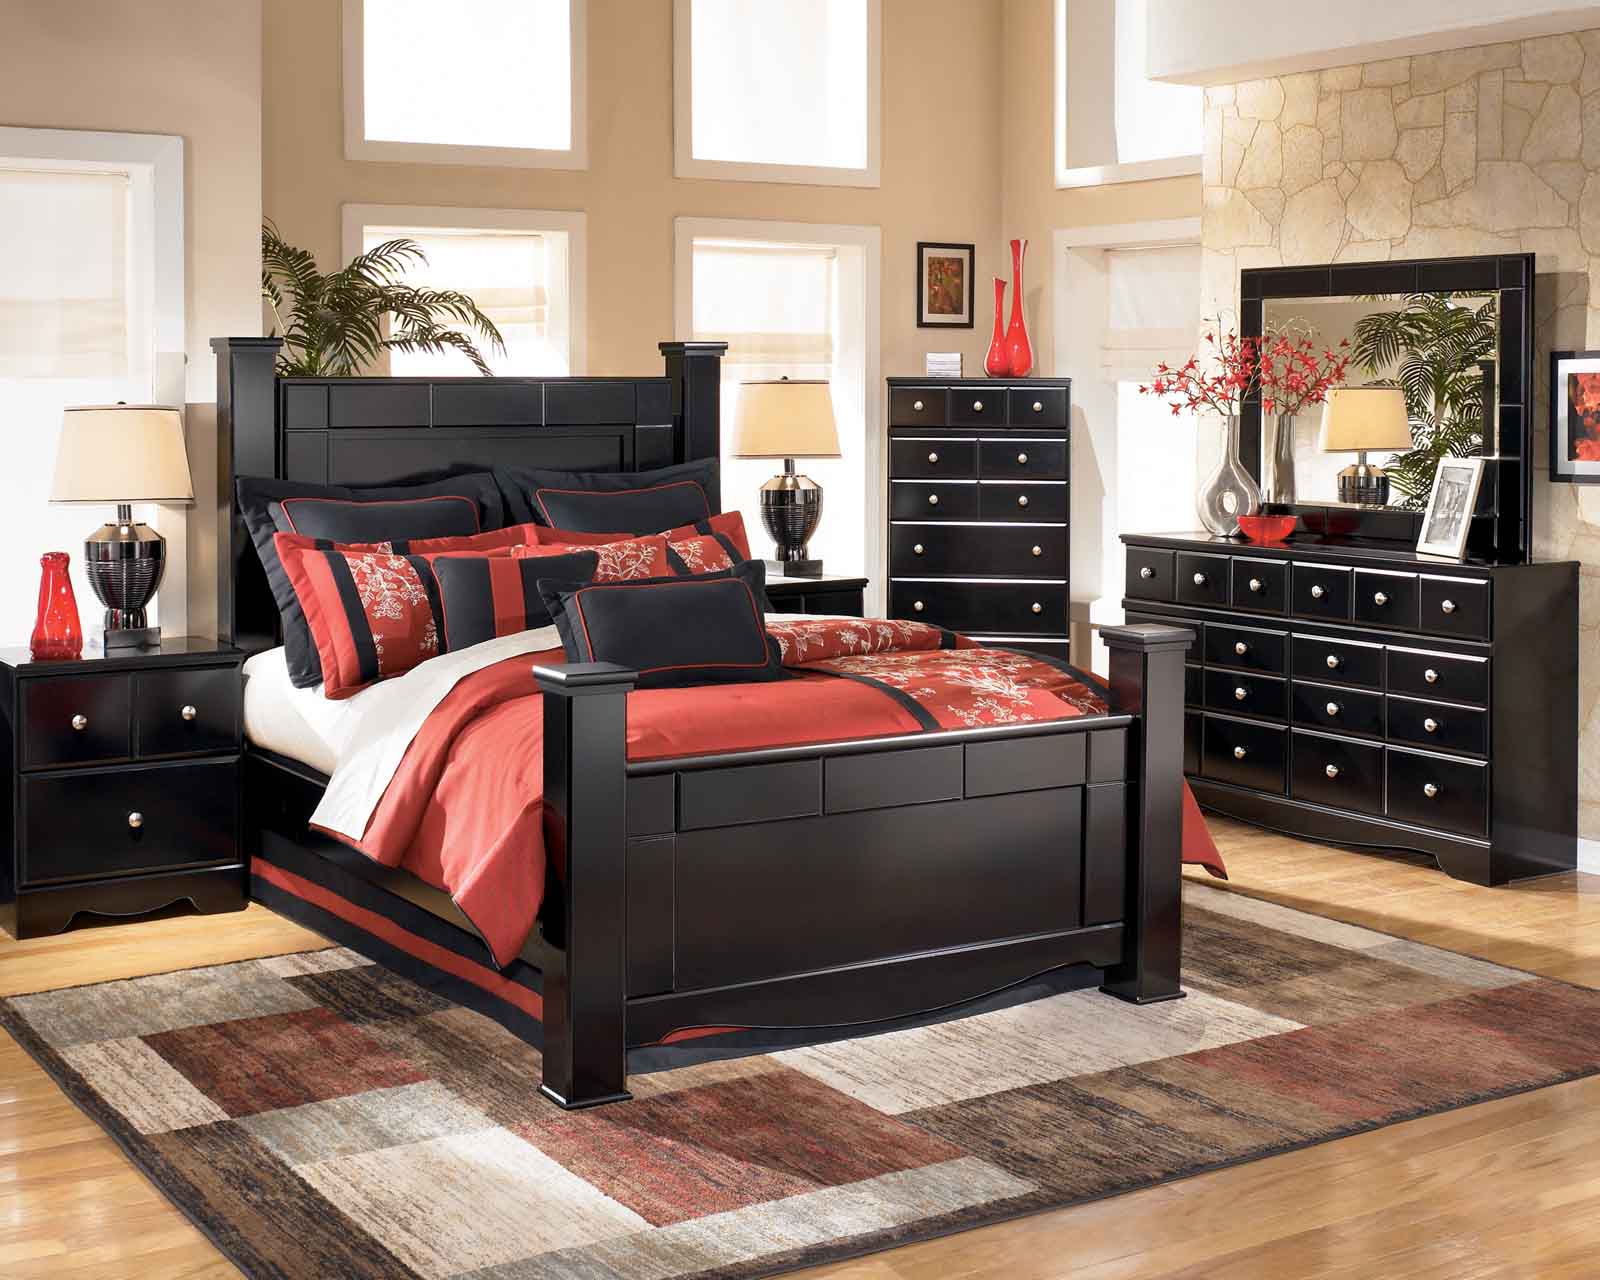 Black bedroom furniture sets Shay Poster bedroom set in black LWYUAXT